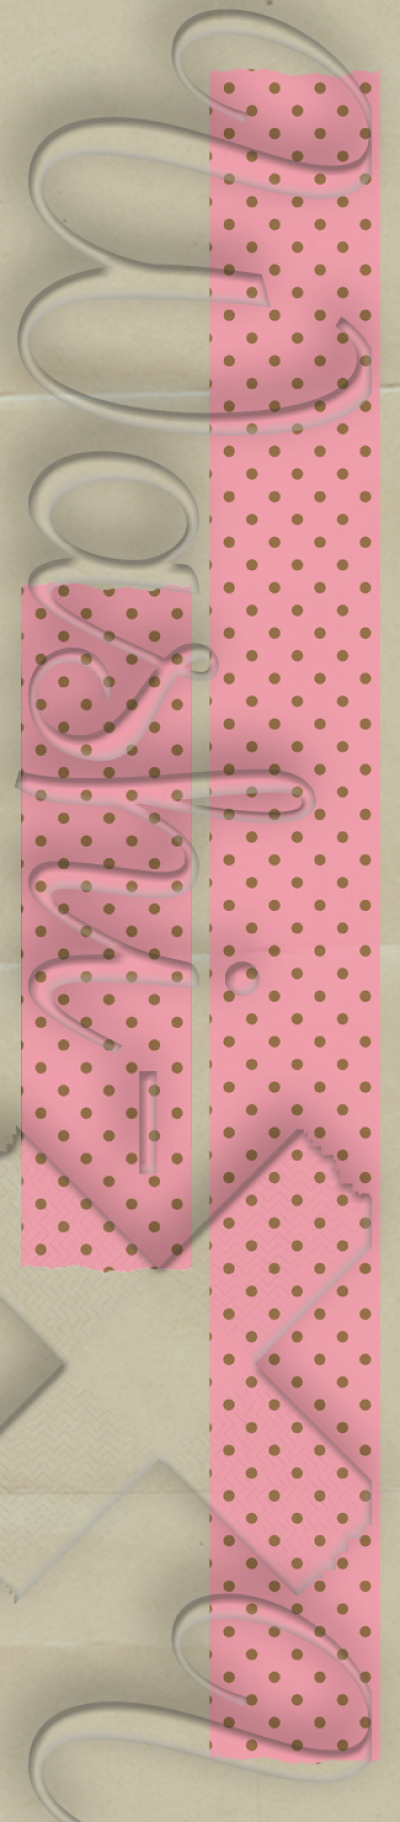 Pink-brown dots patterned washi tape